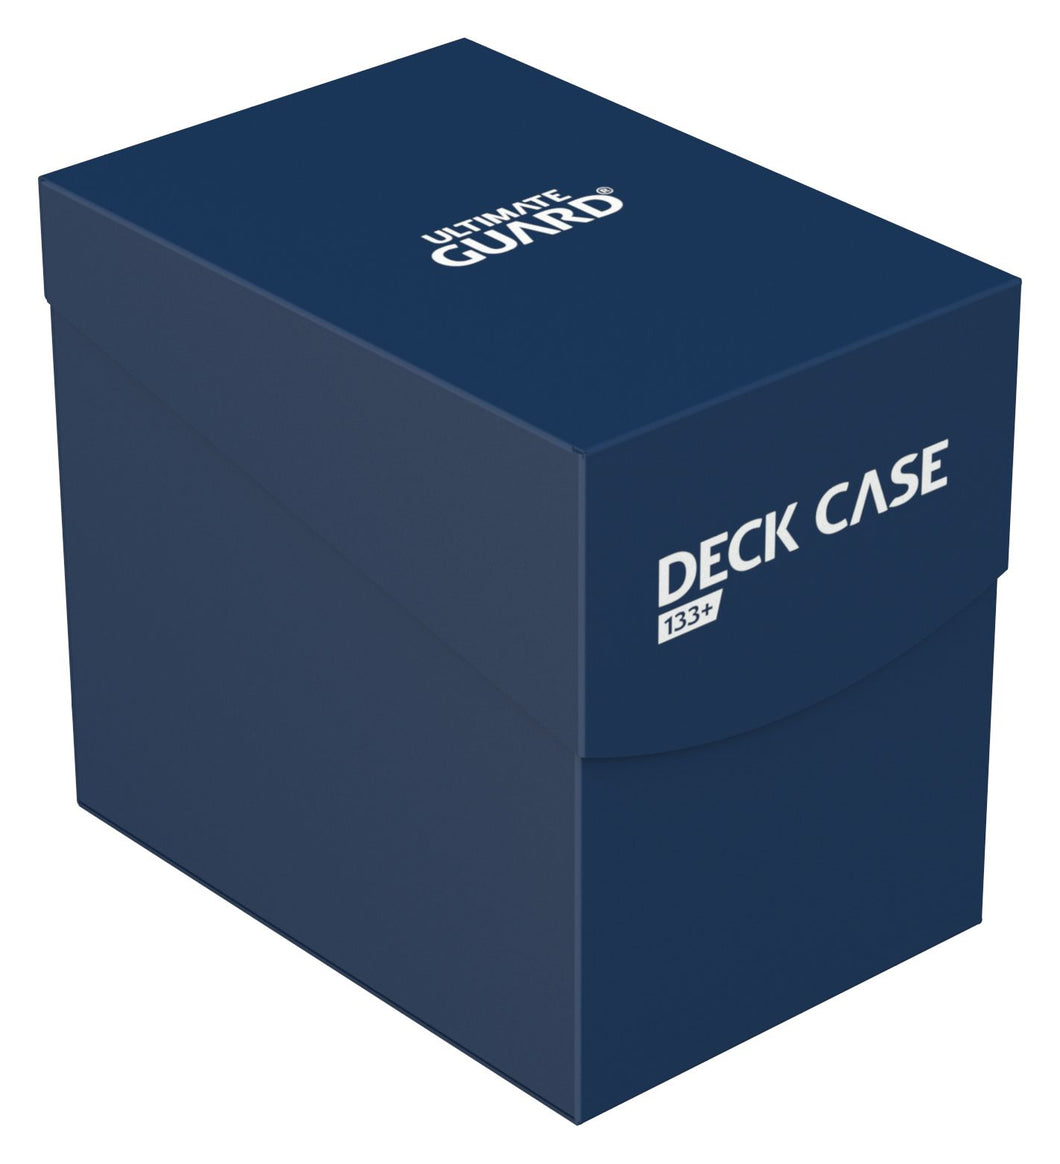 Ultimate Guard Deck Case 133+ (Blue)